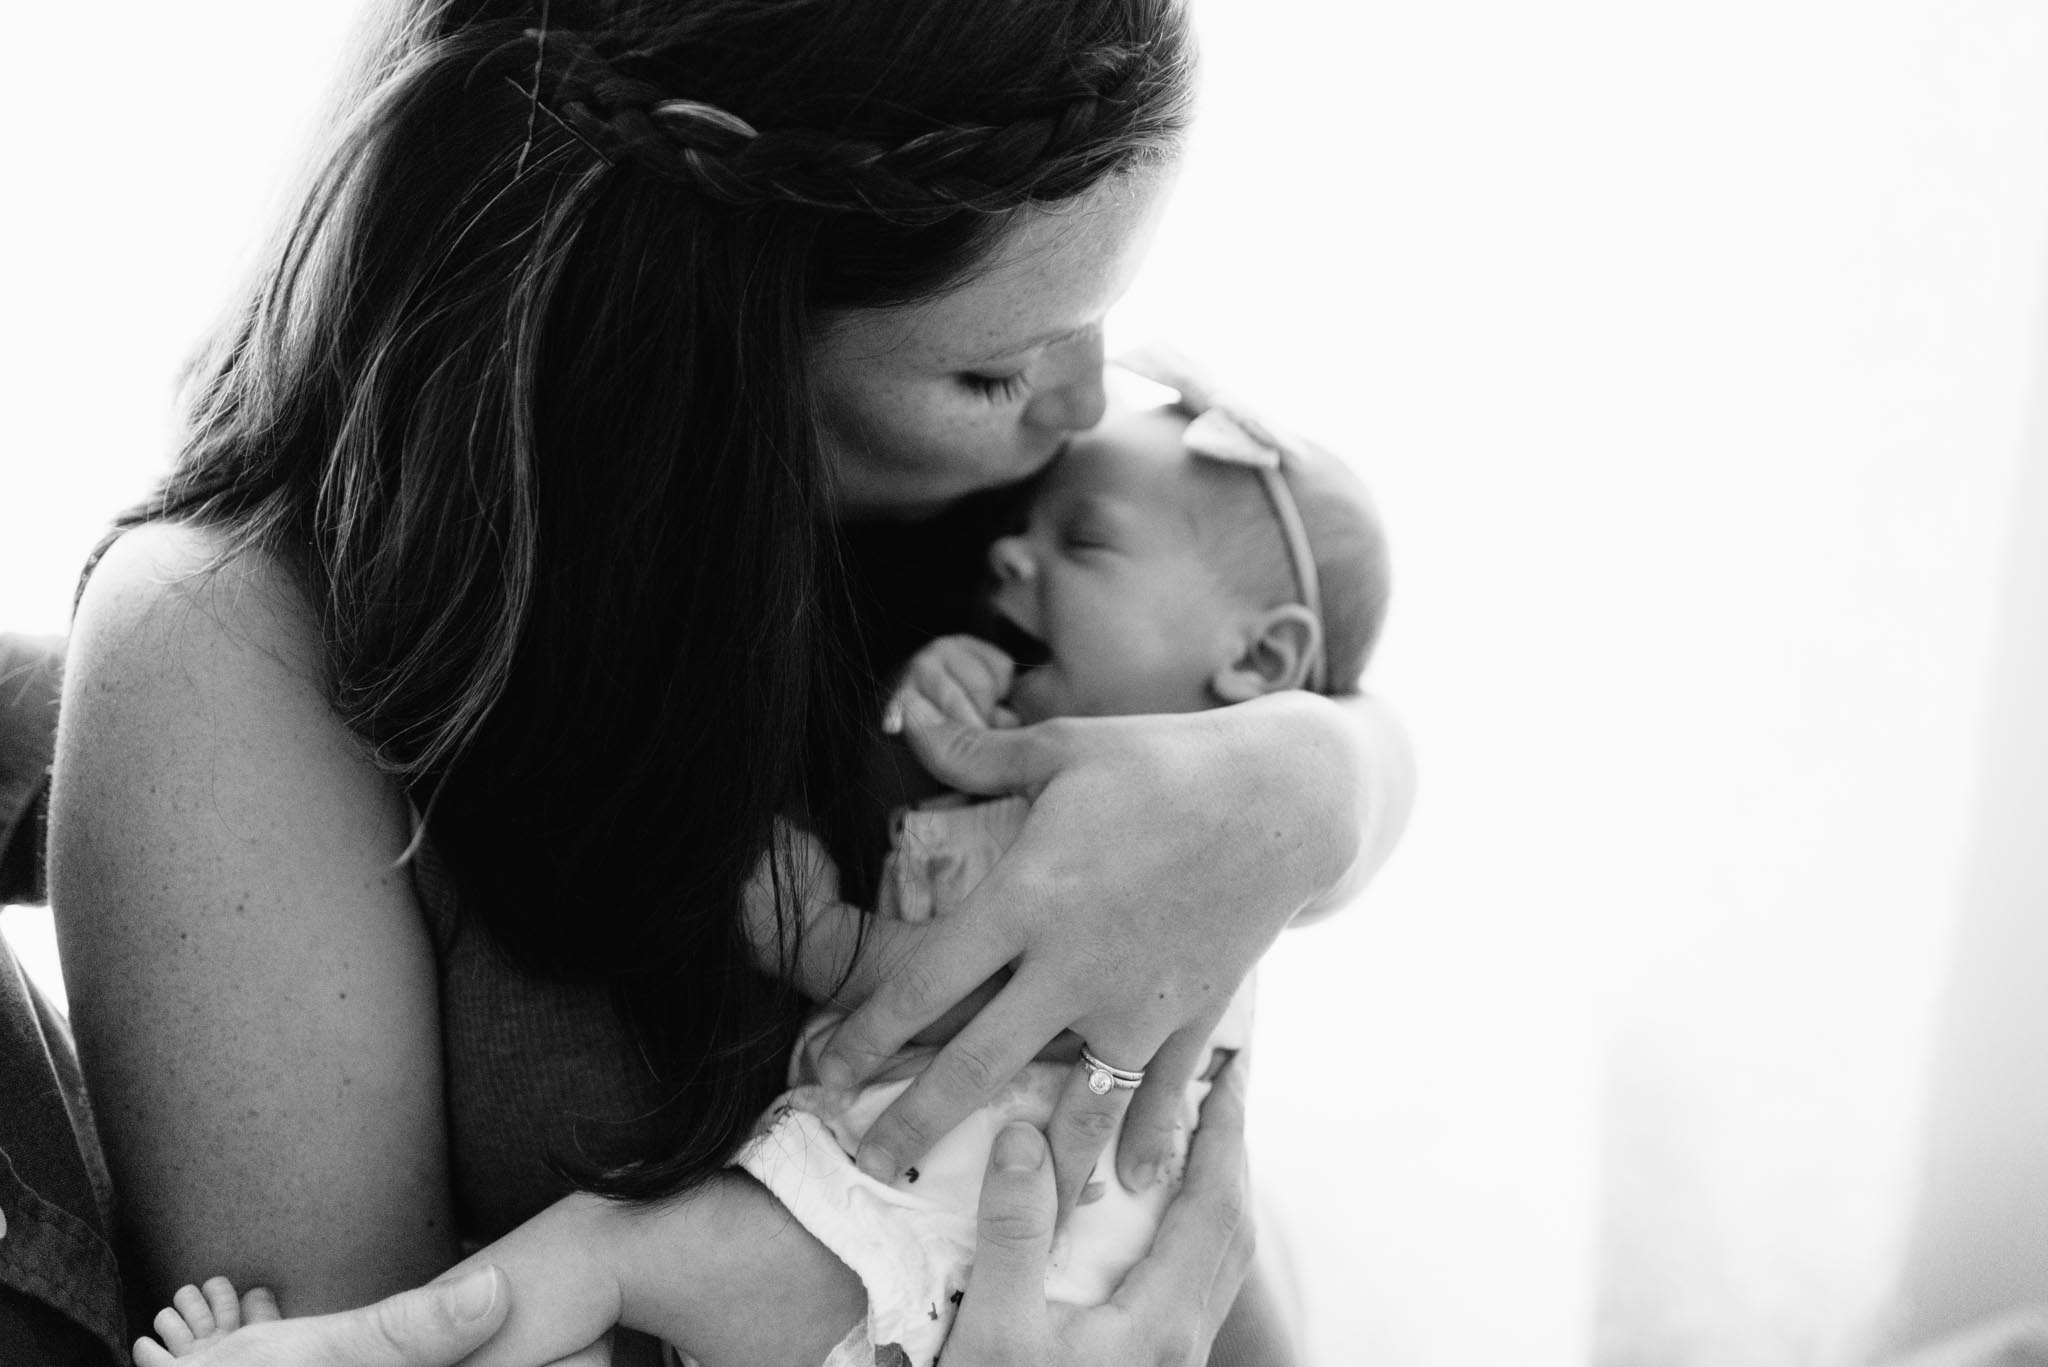 Toronto Newborn Photographer - Olive Photography